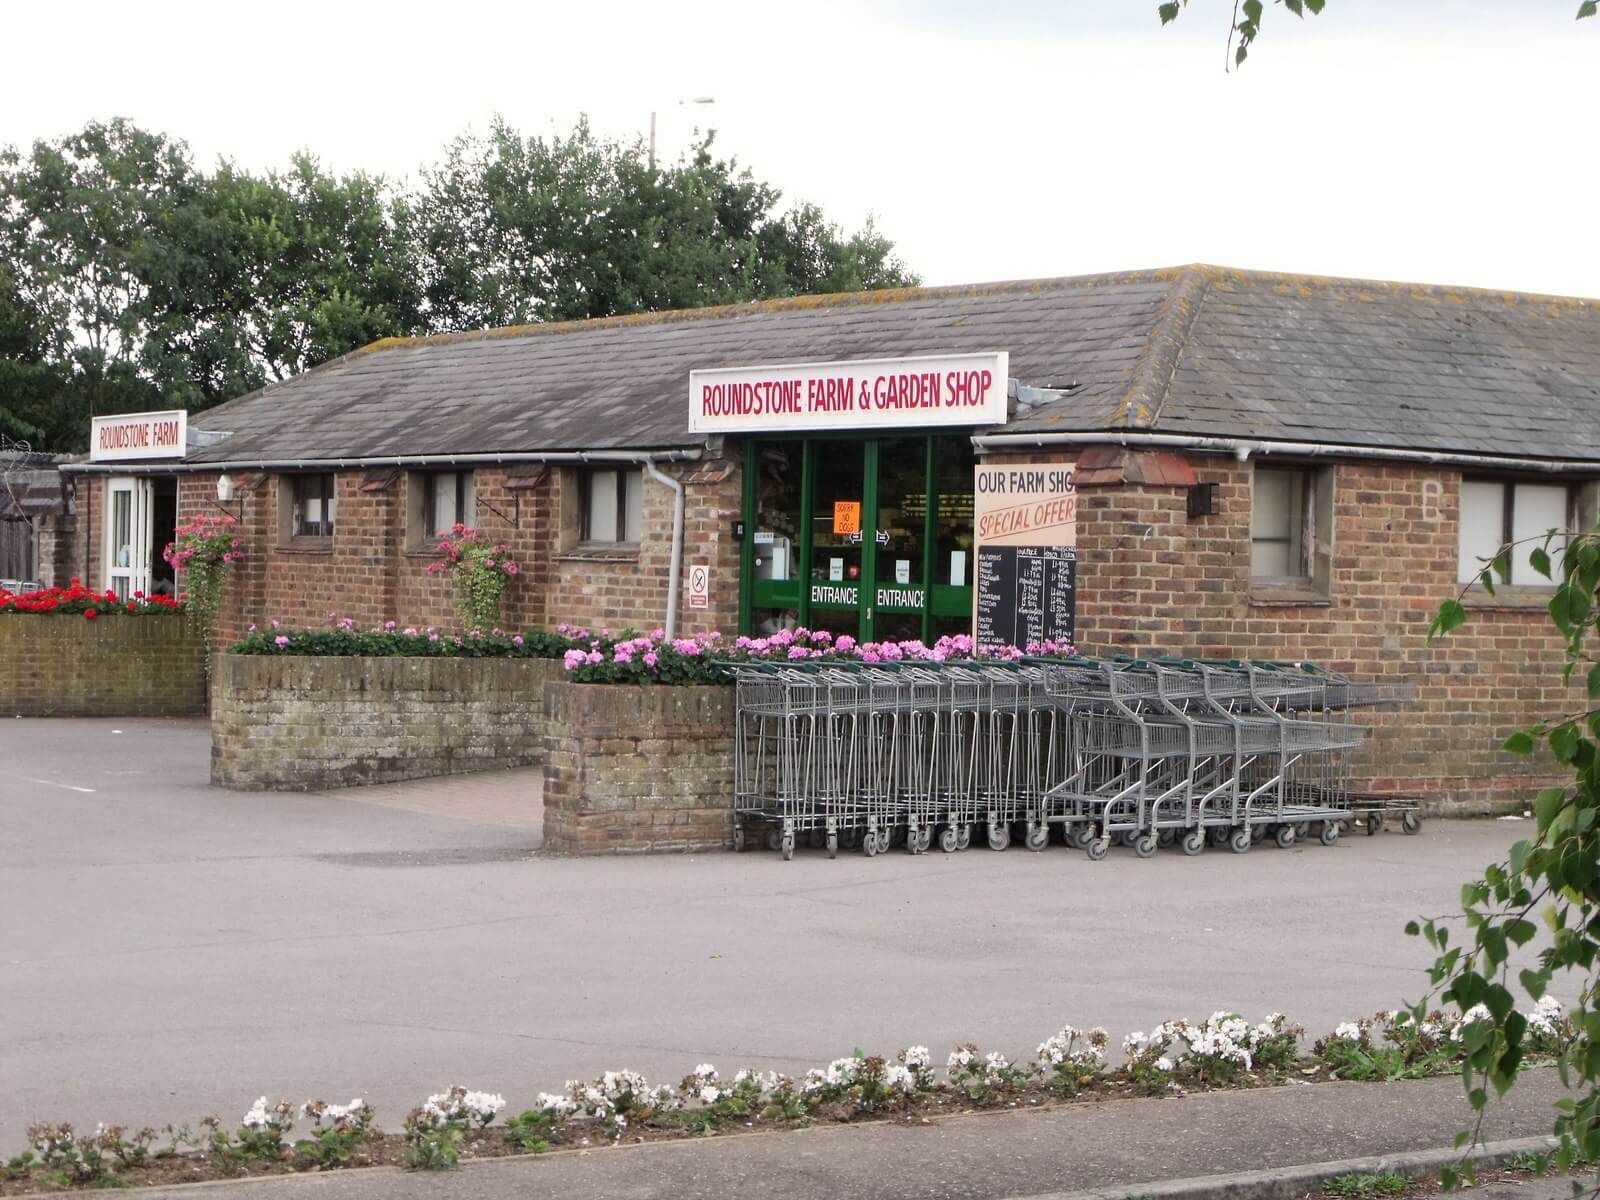 The Roundstone farm shop outlet